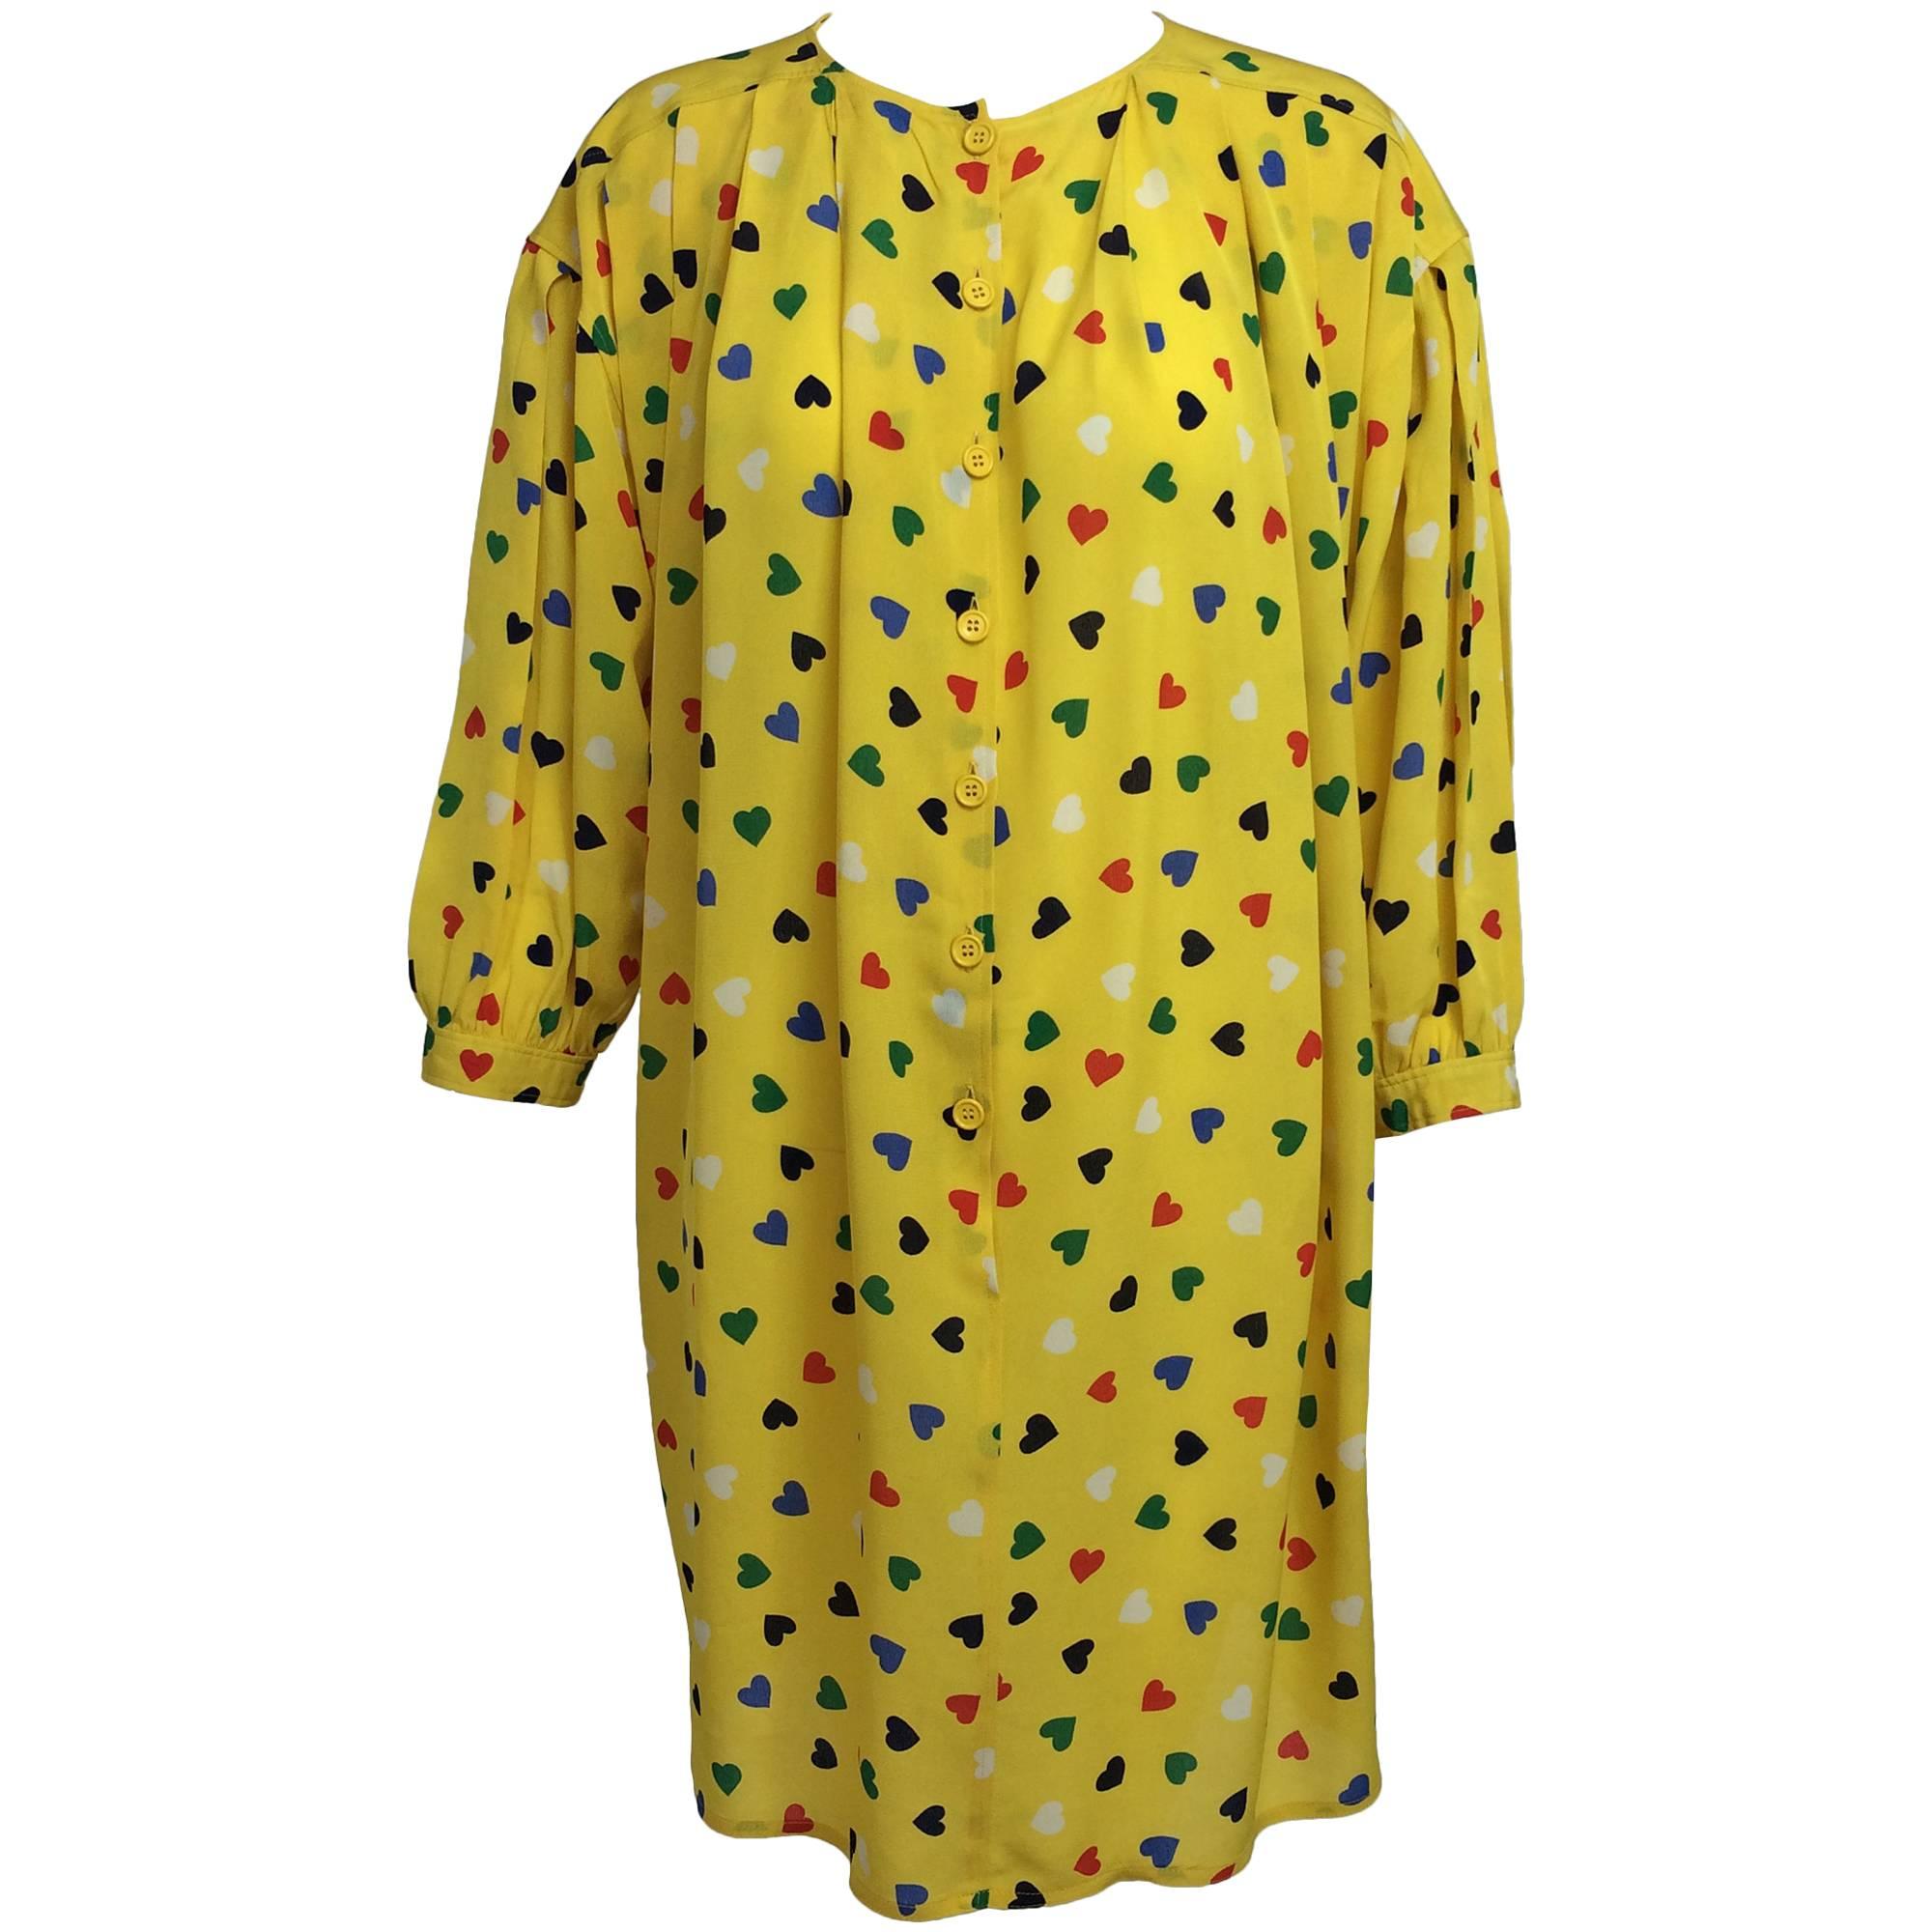 Vintage Ungaro coloured heart print yellow smock dress 1980s